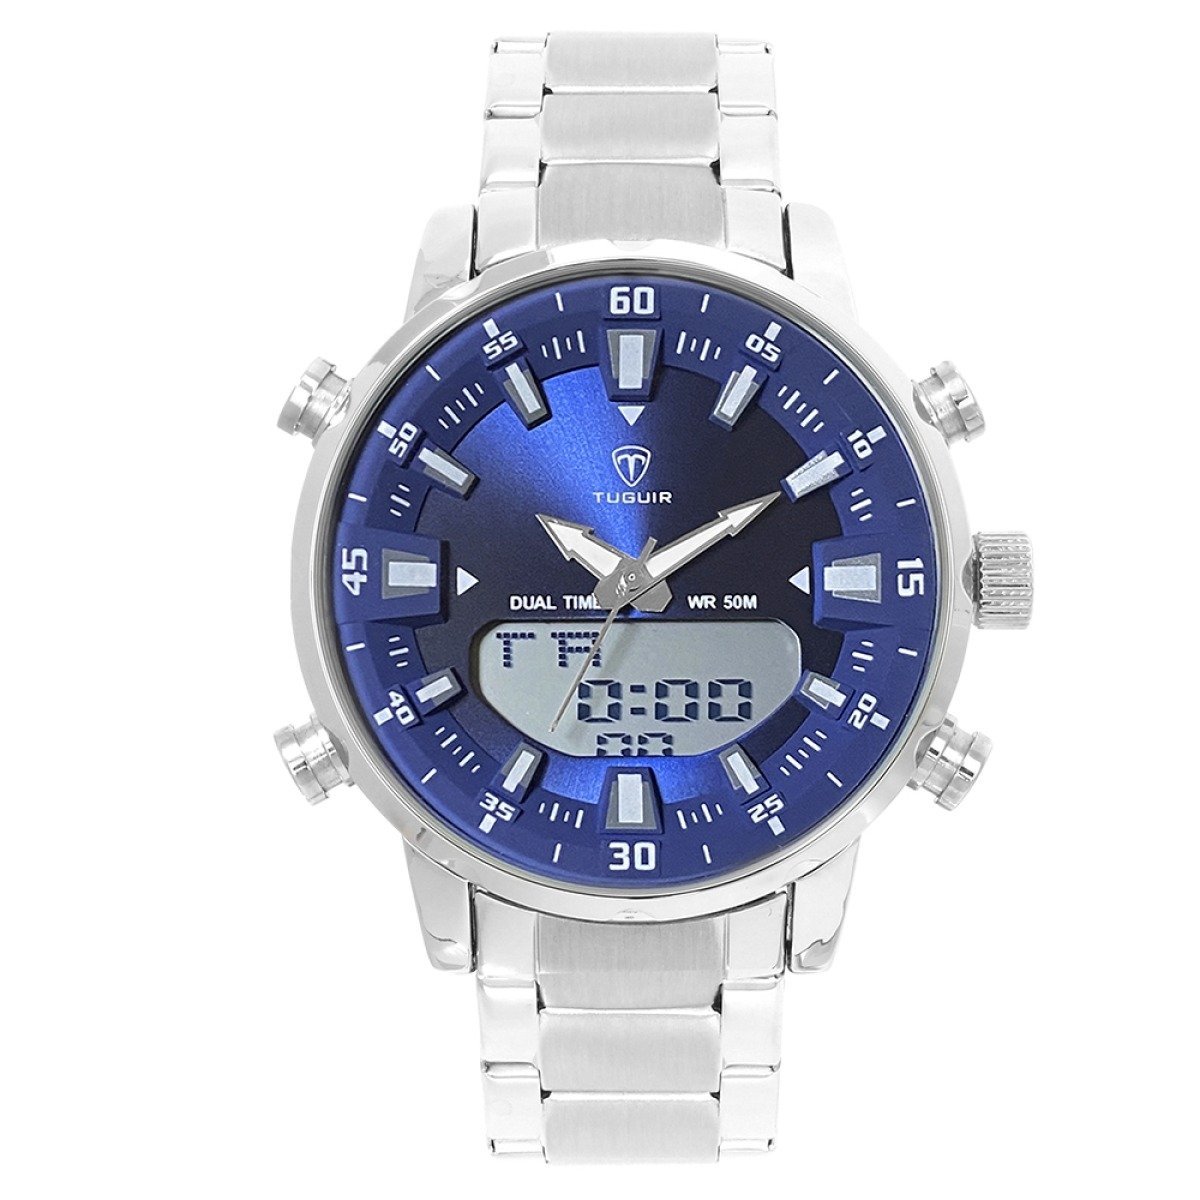 Relógio Masculino Tuguir Anadigi Tg1815 Prata e Azul - 1